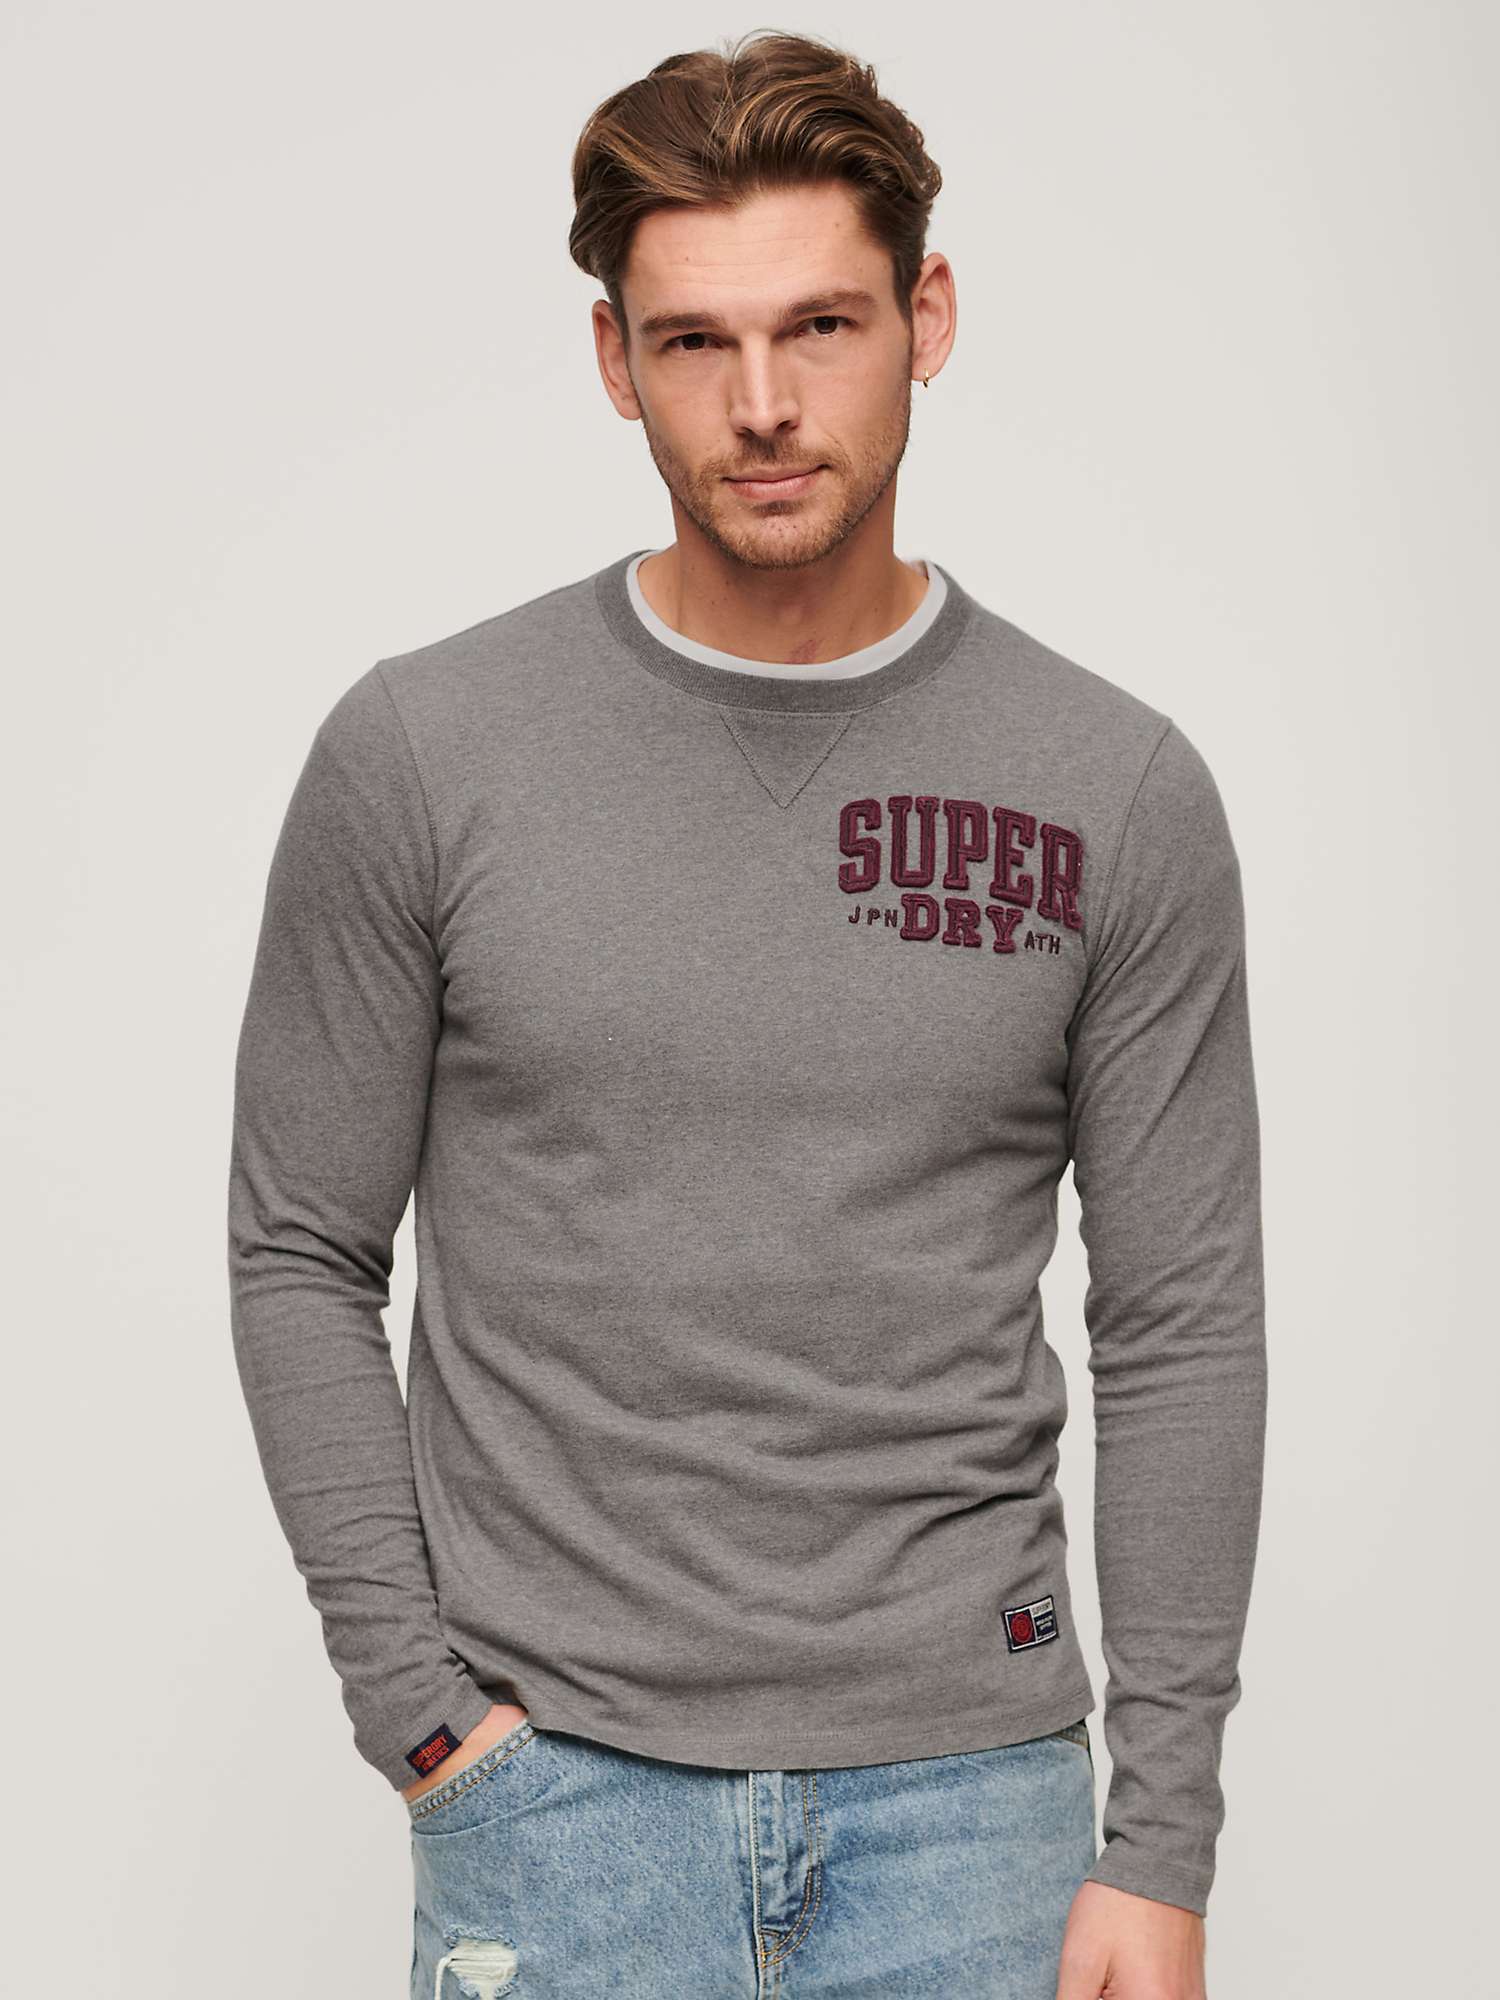 Buy Superdry Vintage Athletic Long Sleeve T-Shirt, Grey Online at johnlewis.com